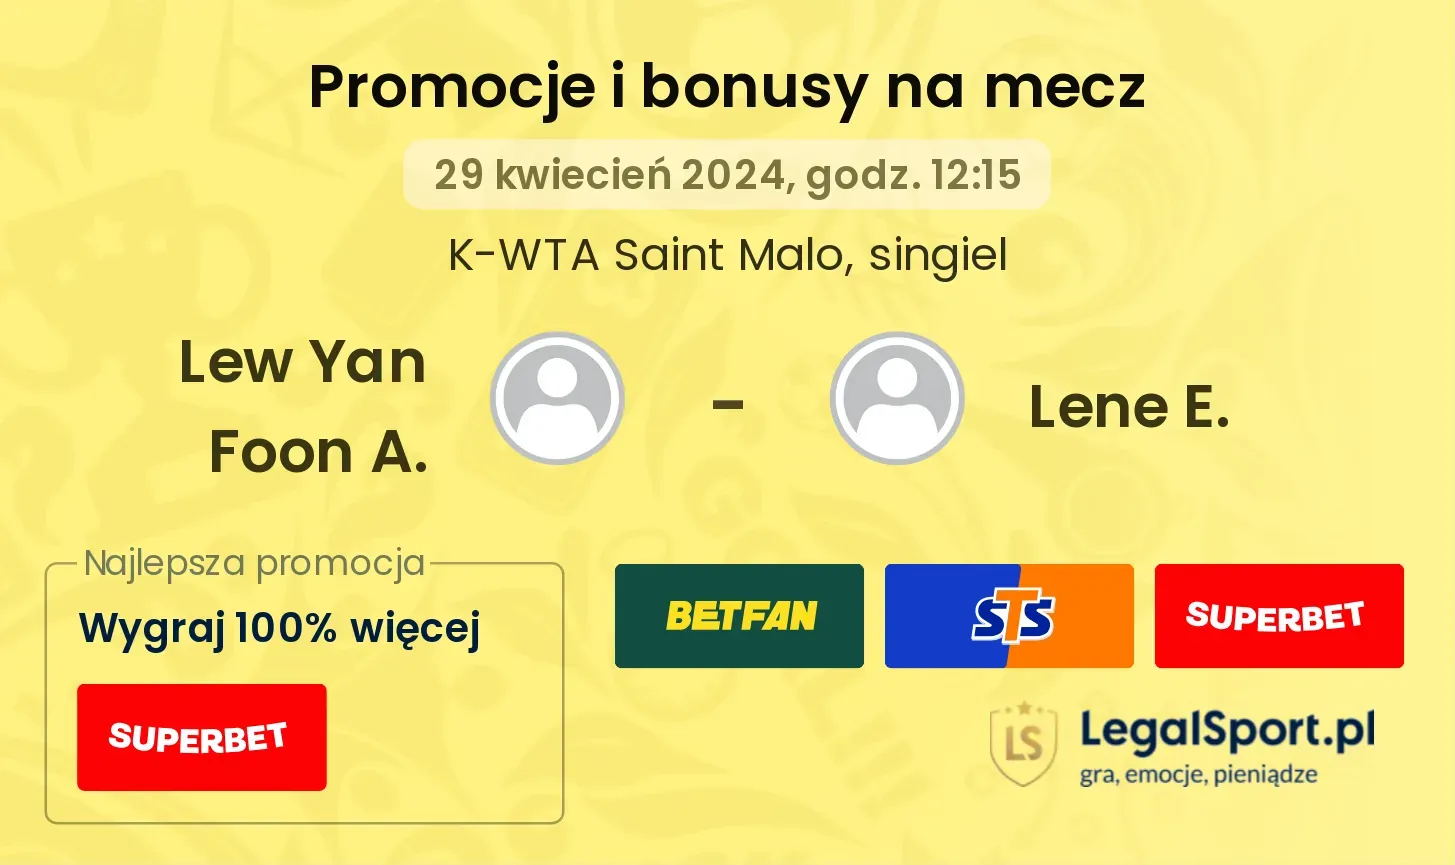 Lew Yan Foon A. - Lene E. promocje bonusy na mecz